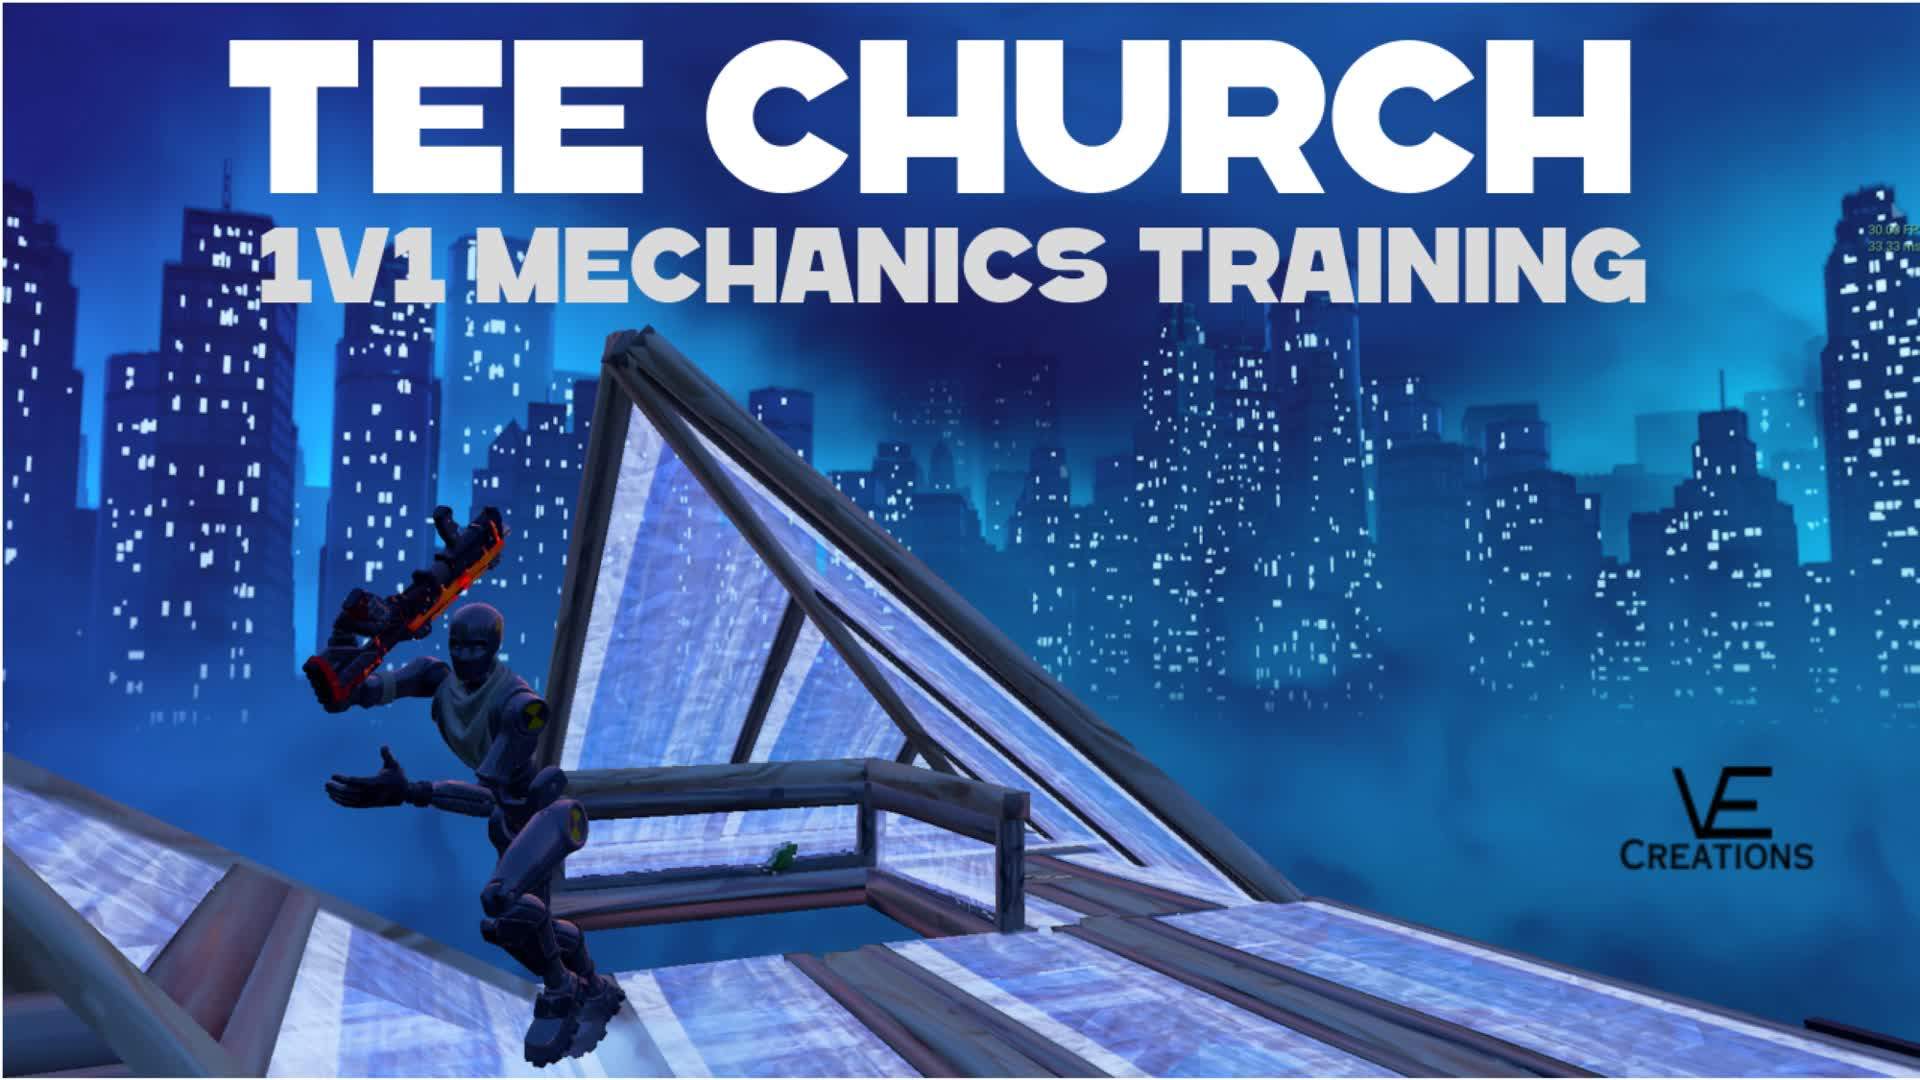 TeeChurch 1v1 Mechanics Training